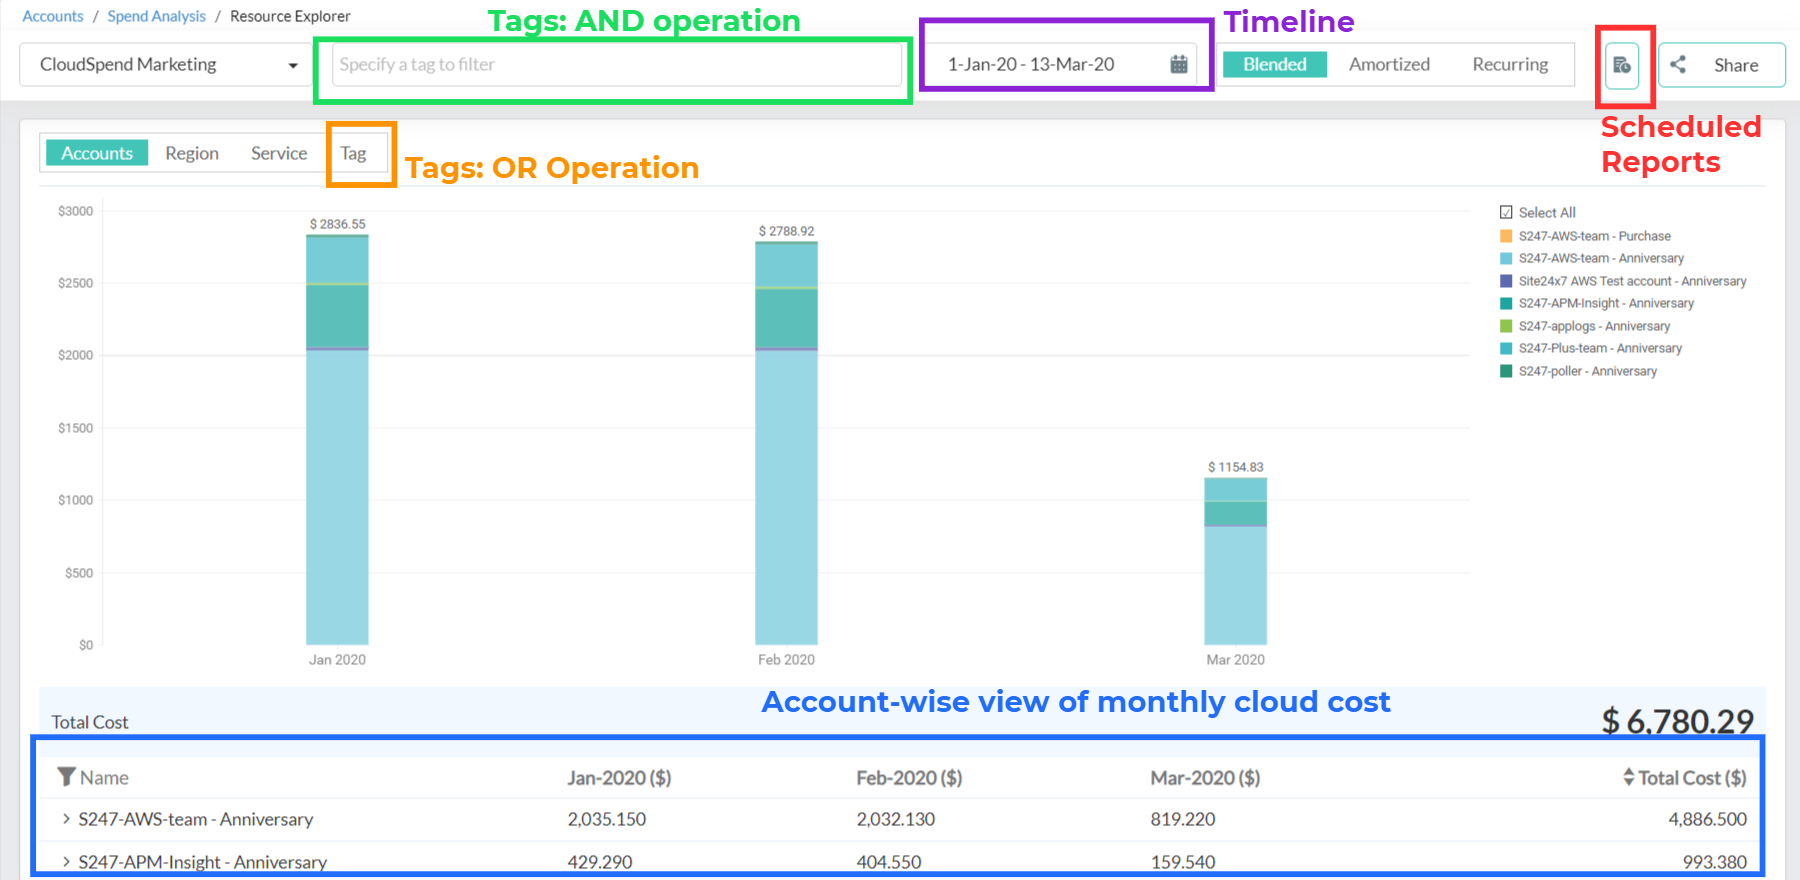 Account splitup view of cloud cost